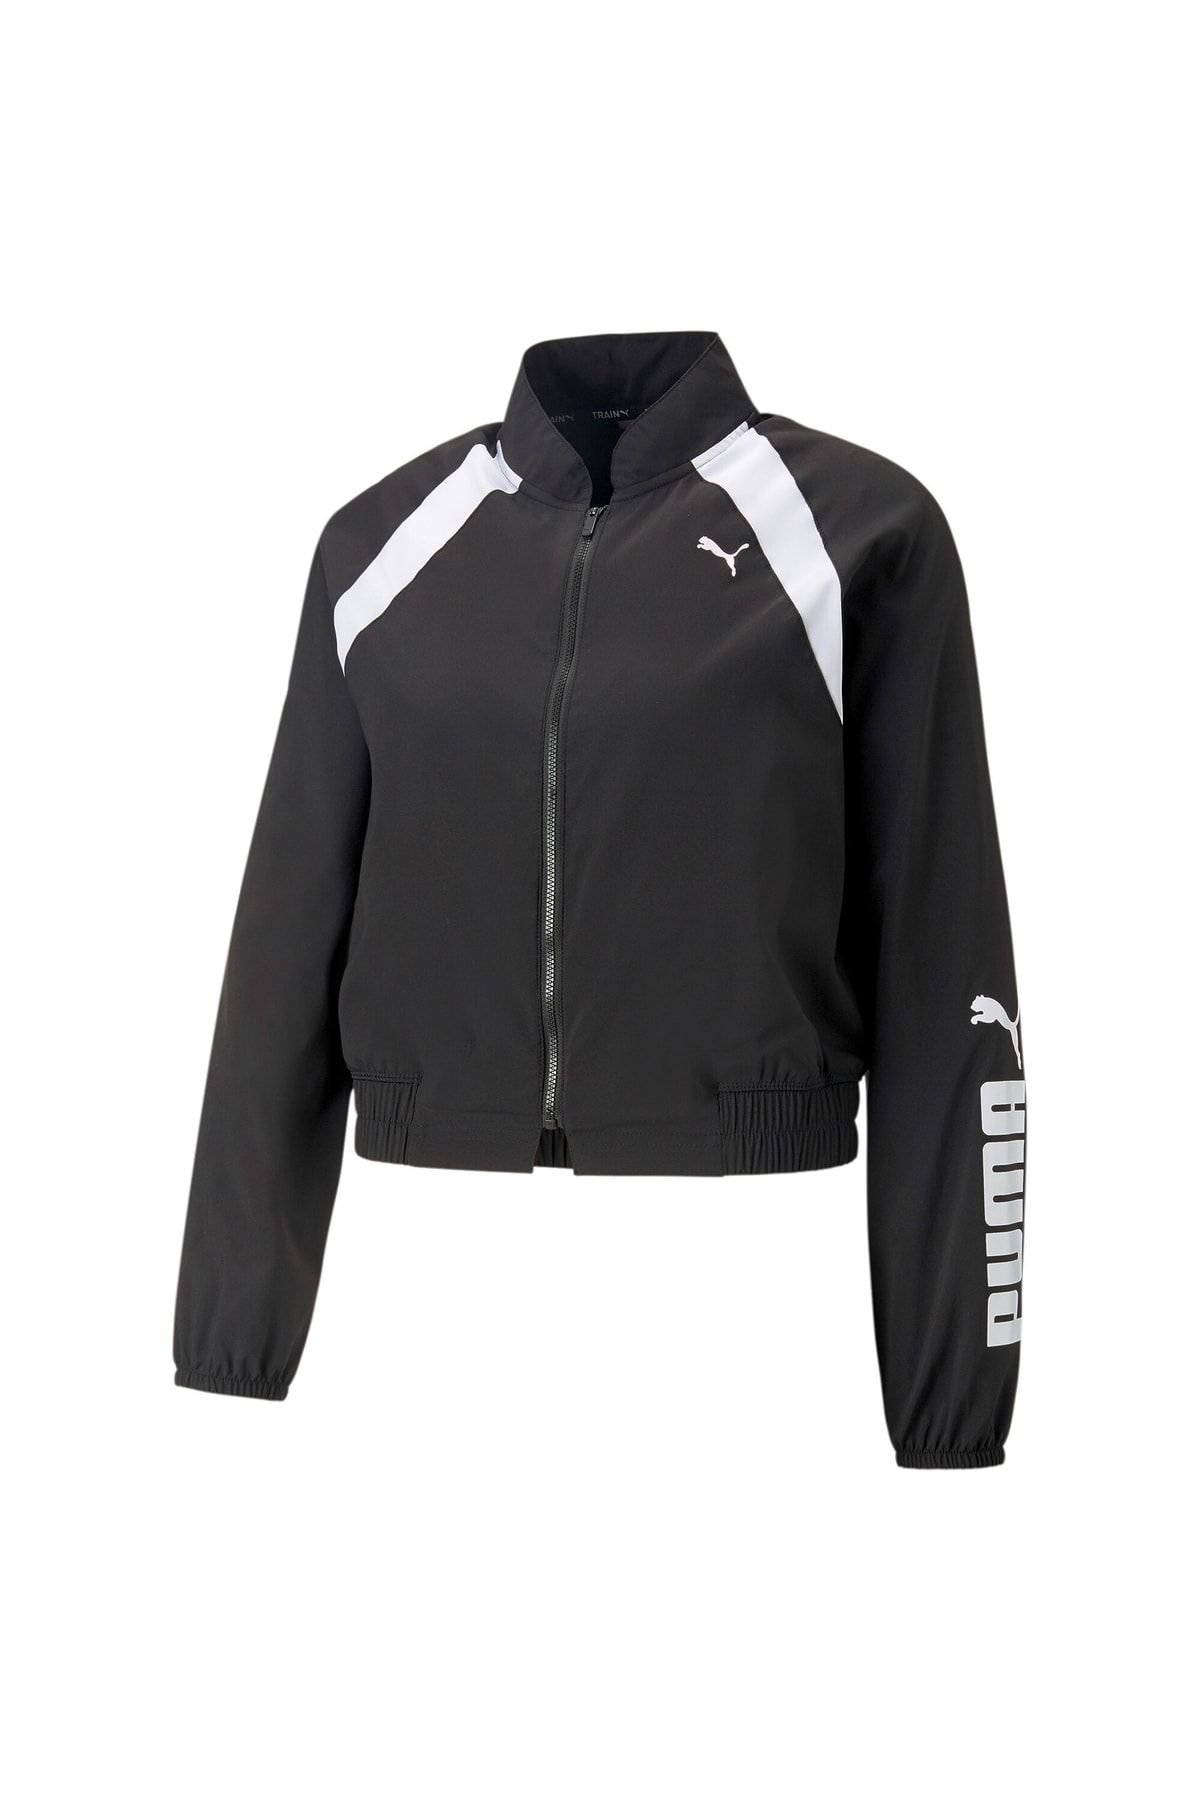 Puma Fit Woven Fashion Jacket Black - Siyah Spor Ceket